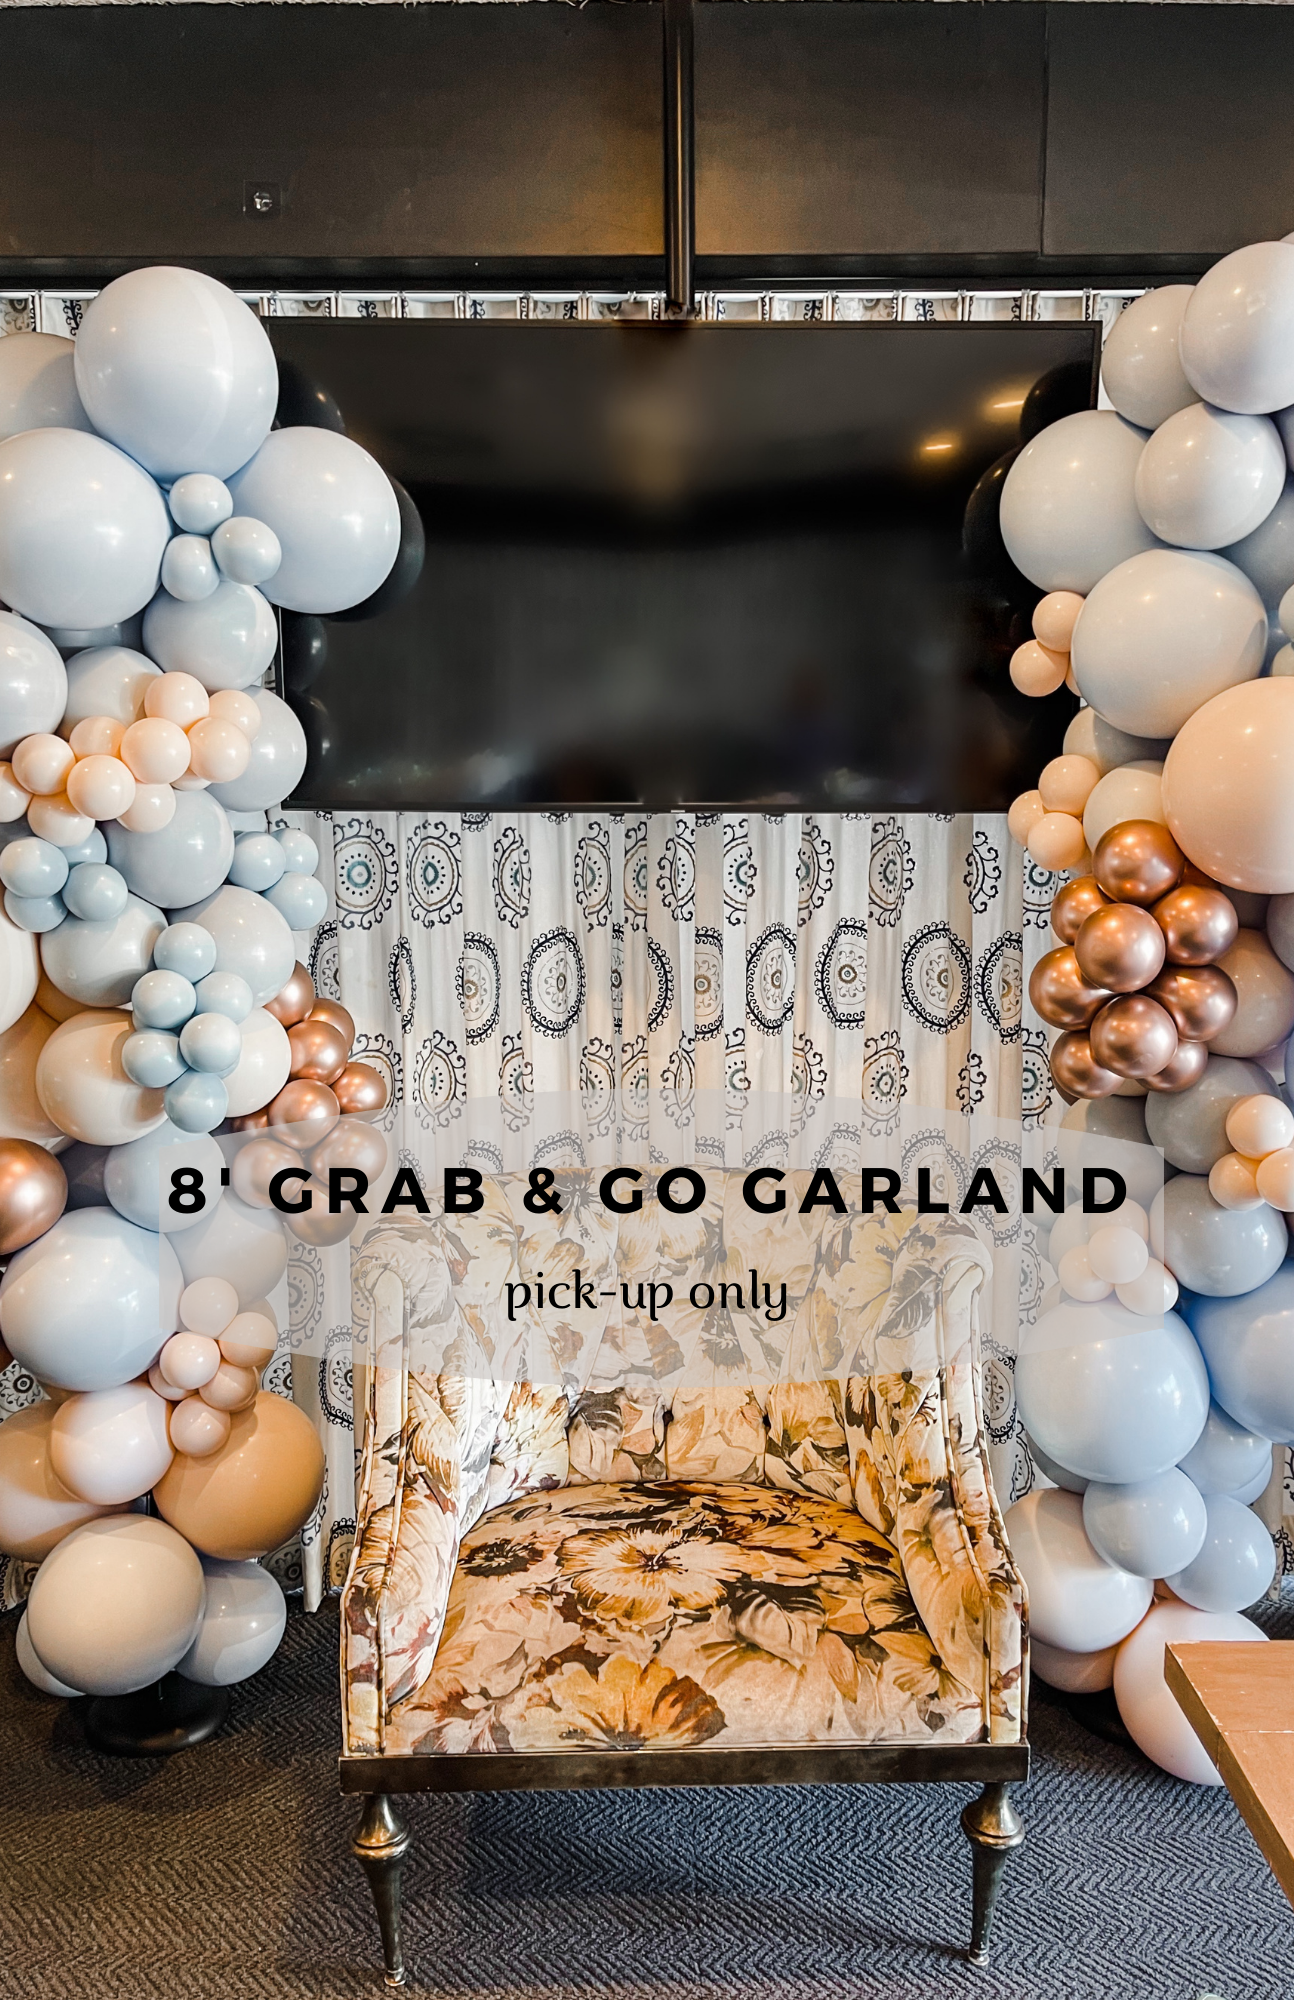 Grab & Go Garland — Pop of Color Balloon Design